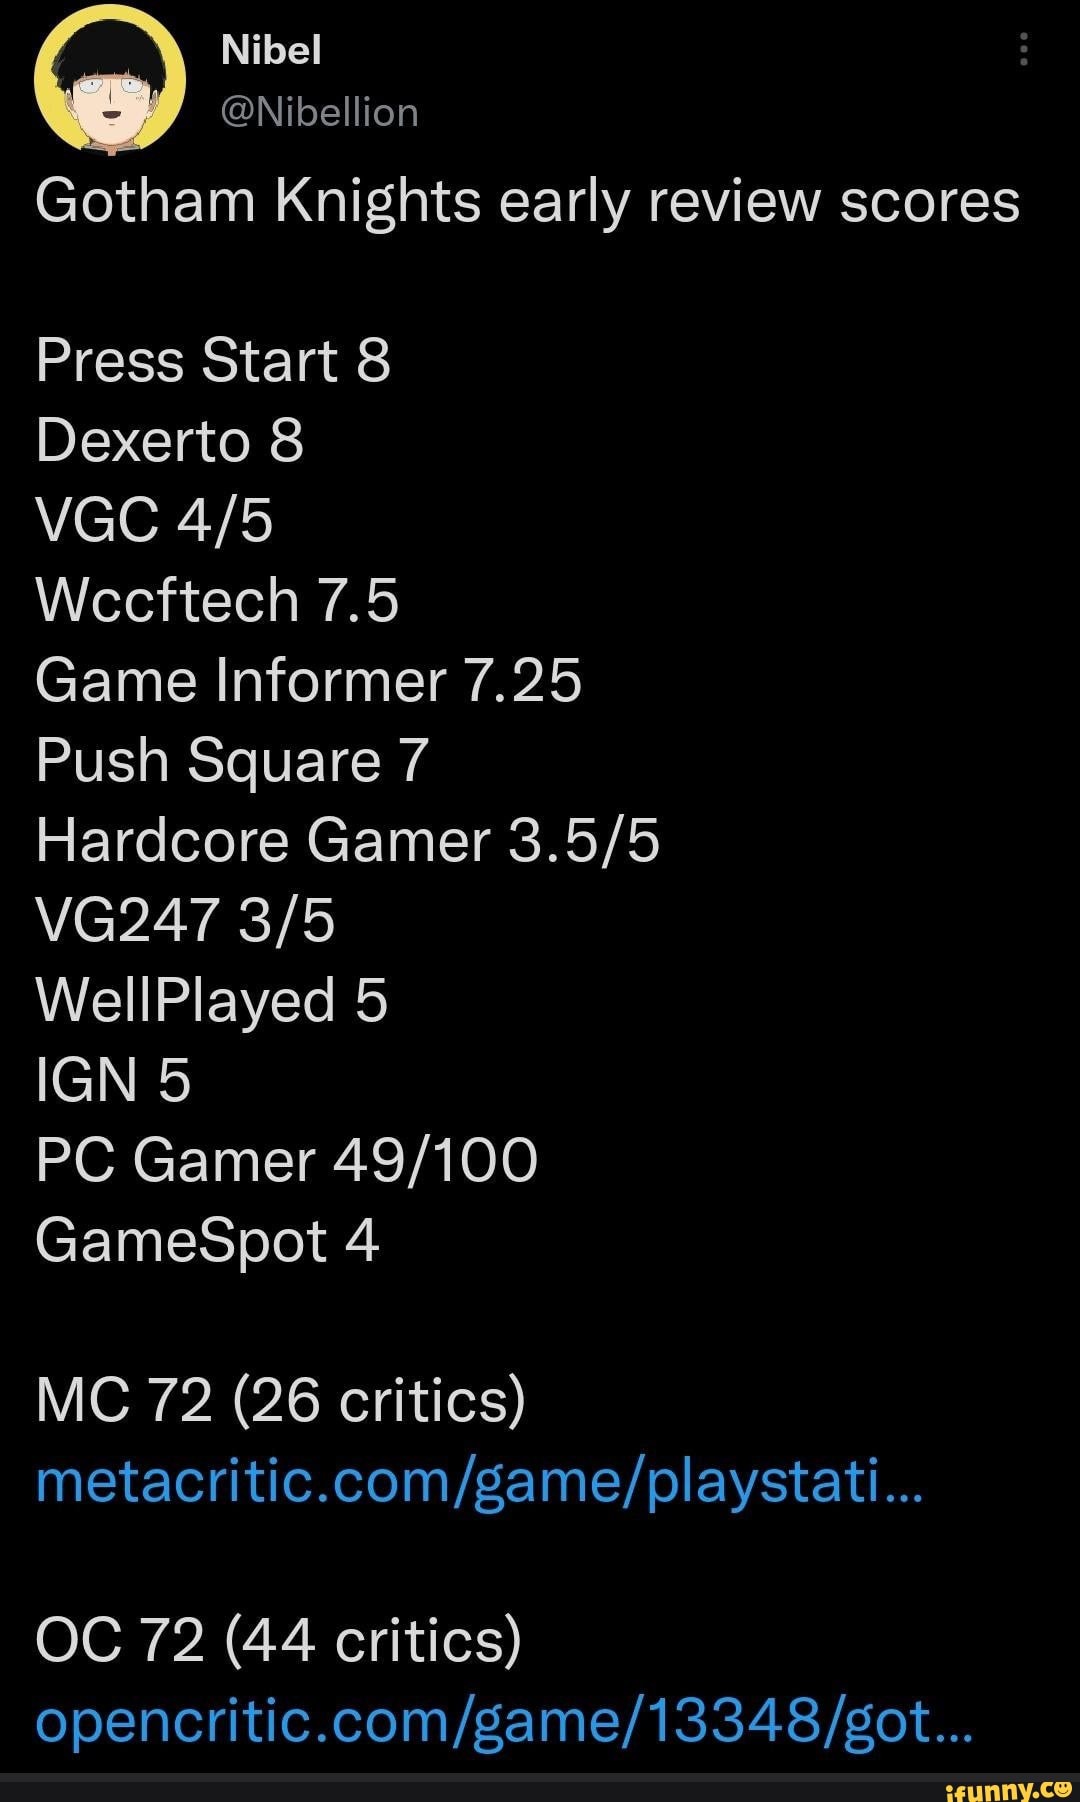 Nibel @Nibellion Gotham Knights early review scores Press Start Dexerto VGC  Wecftech 7.5 Game Informer 7.25 Push Square Hardcore Gamer VG247 WellPlayed  5 IGN 5 PC Gamer GameSpot 4 MC 72 (26 critics) OC 72 (44 critics) - iFunny